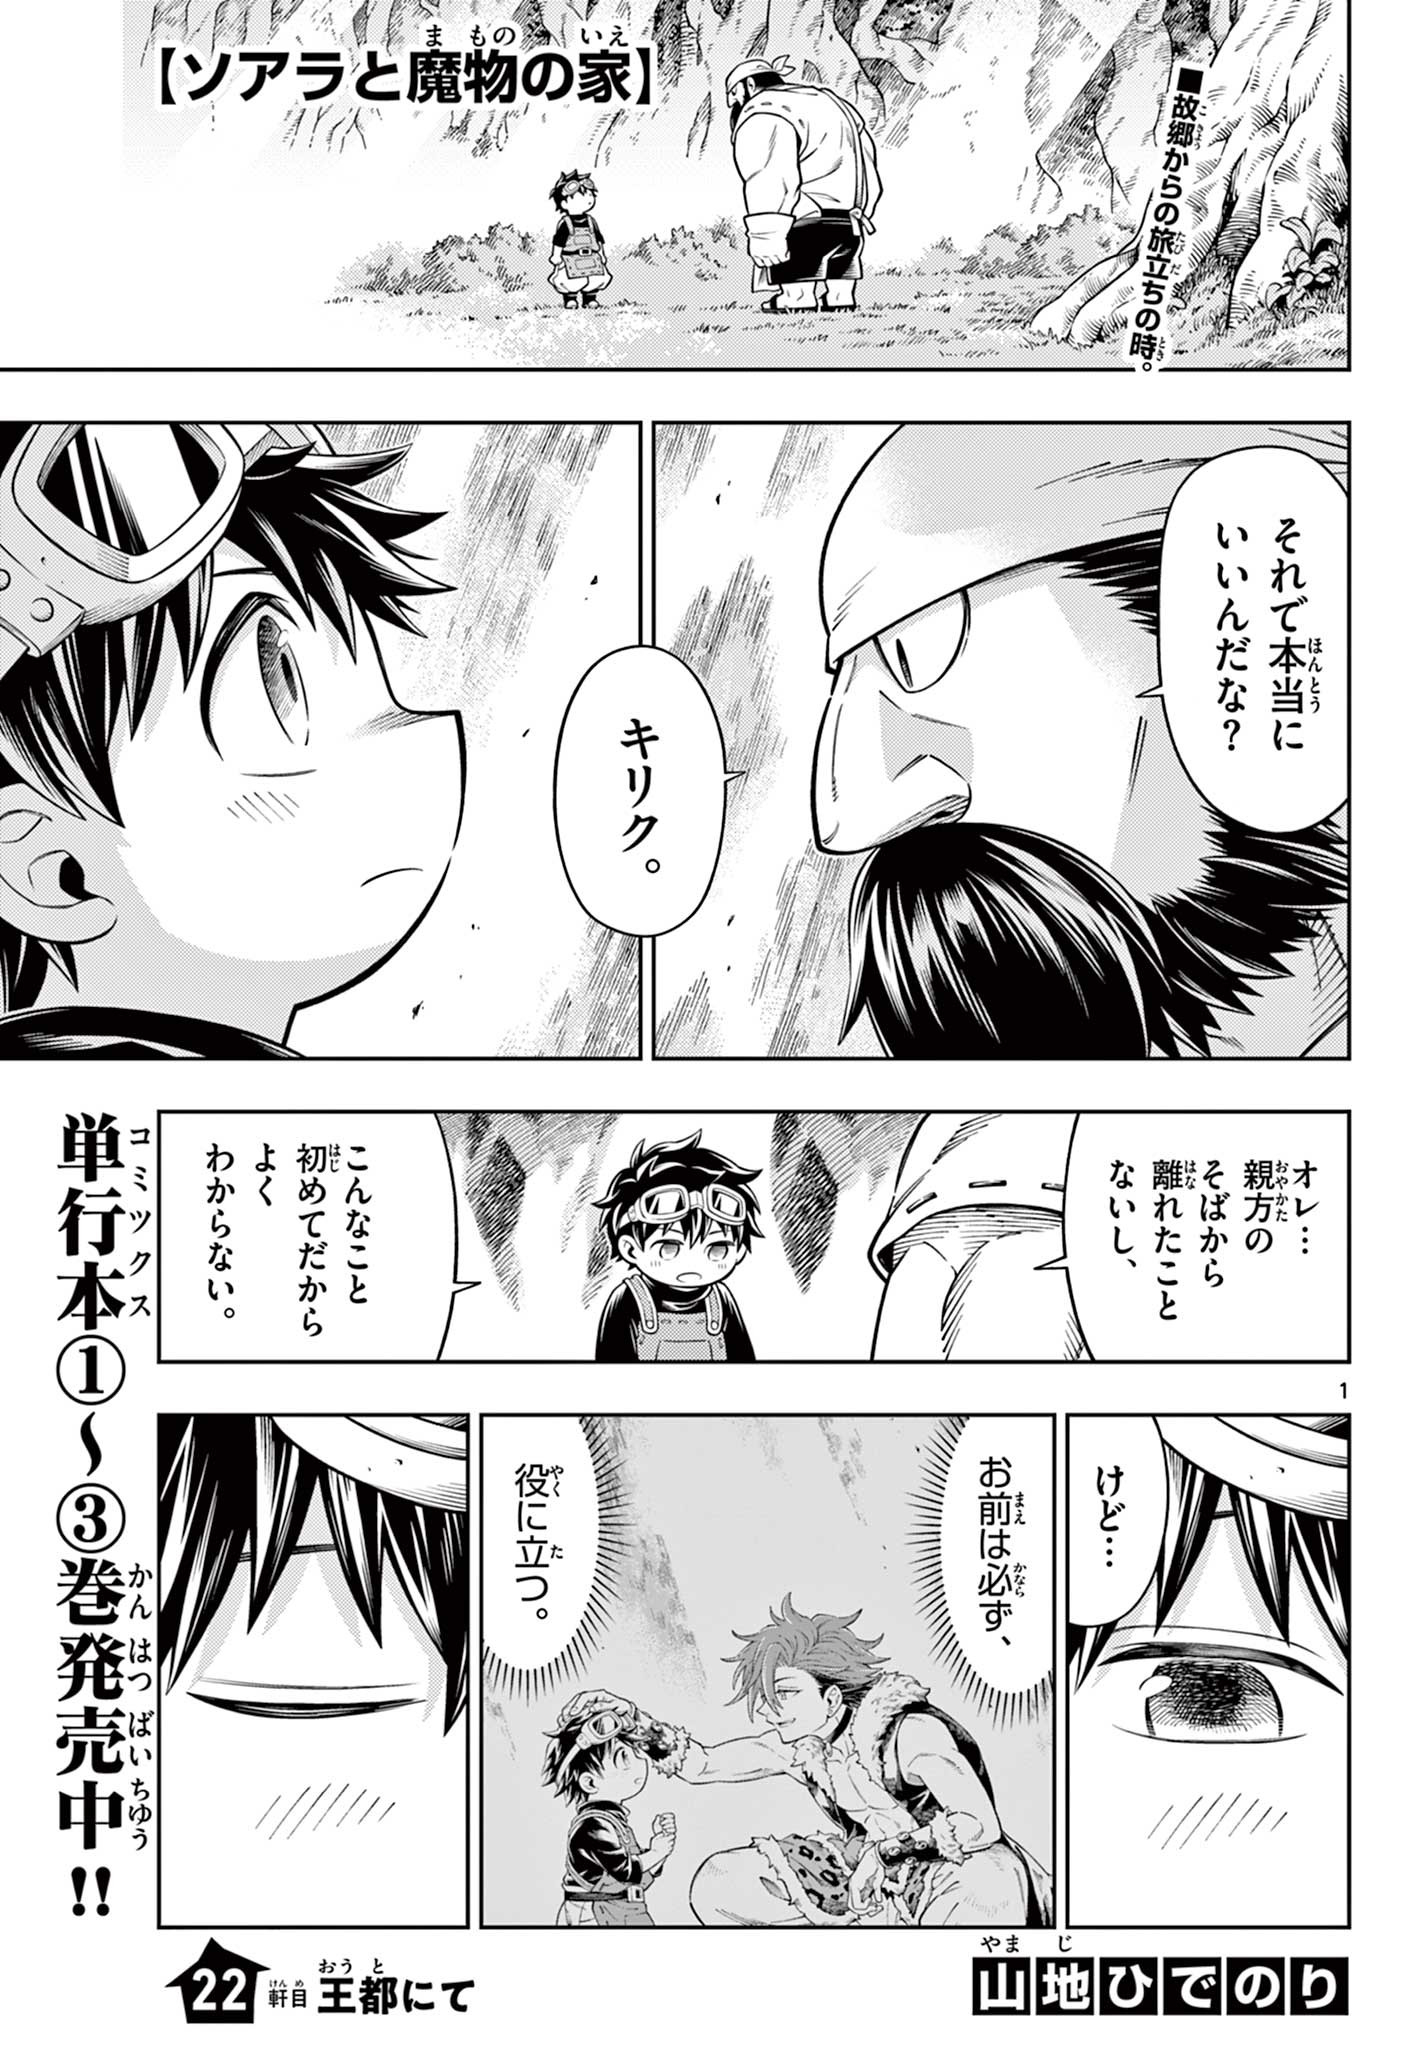 Soara to Mamono no ie - Chapter 22 - Page 1